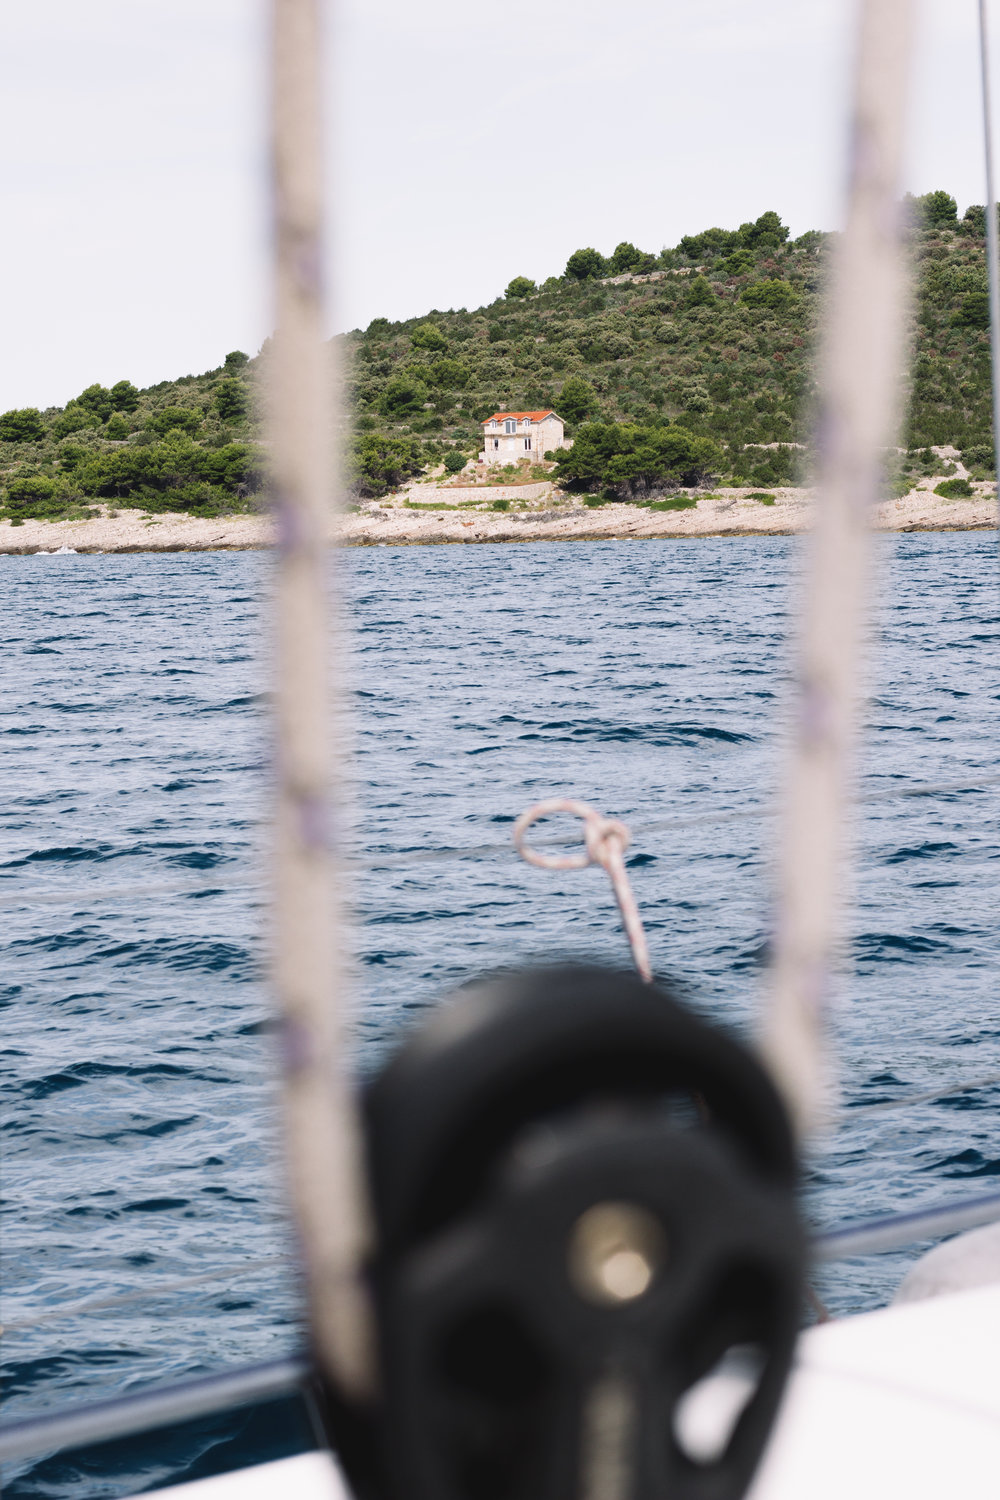 Sailing scenery along the Dalmatian coast